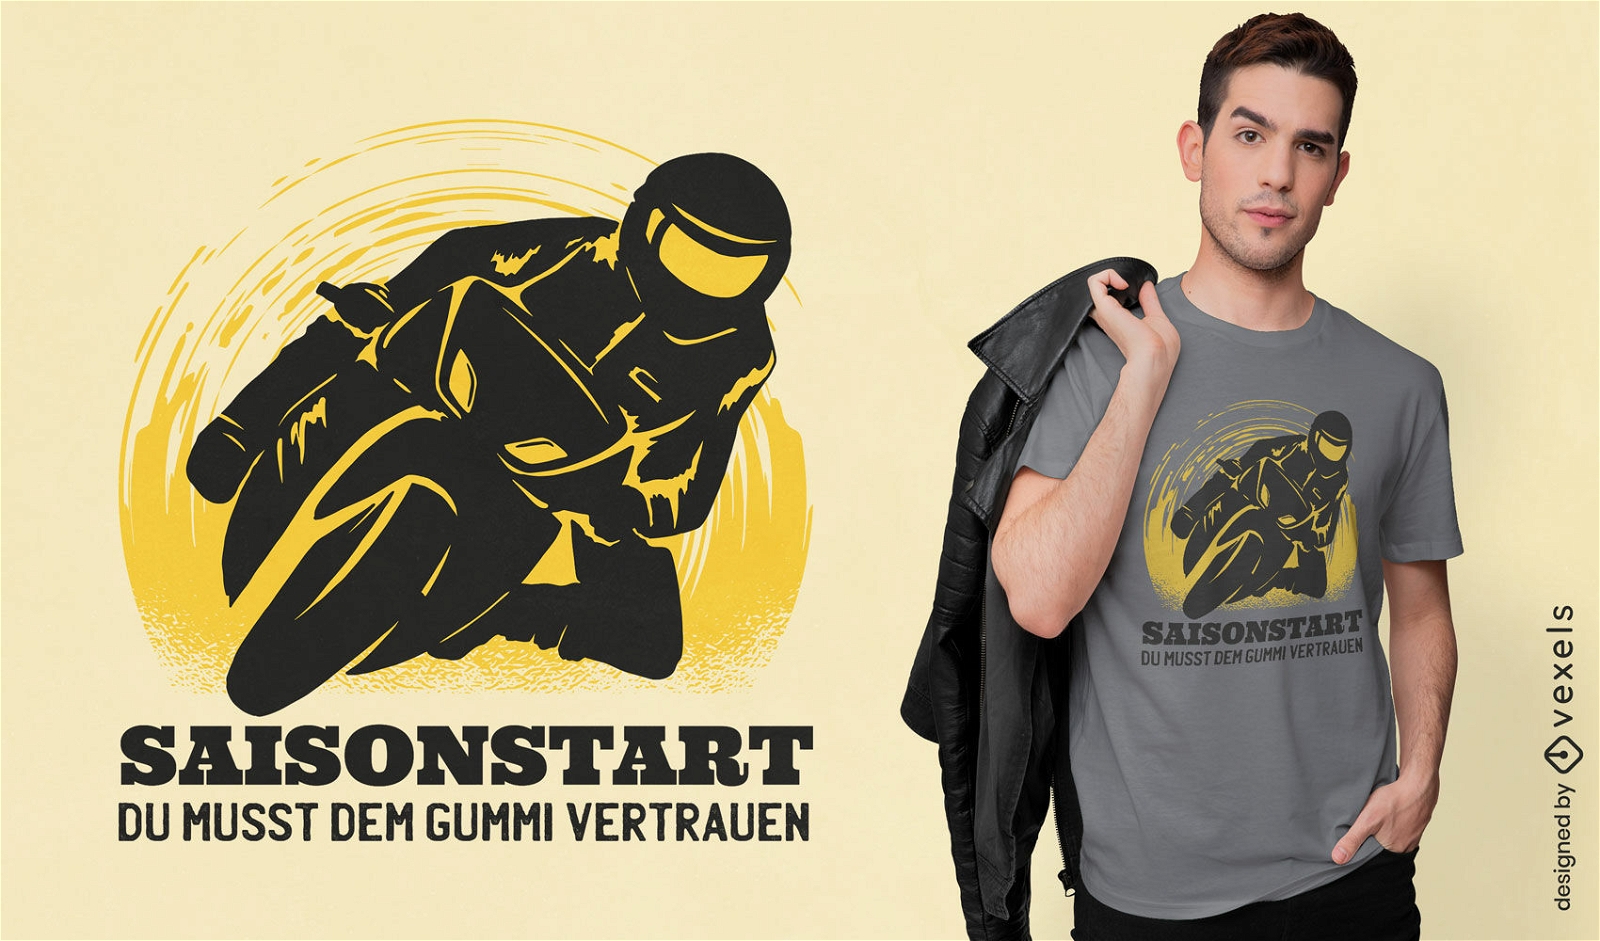 Cool motorcycle stunt t-shirt design